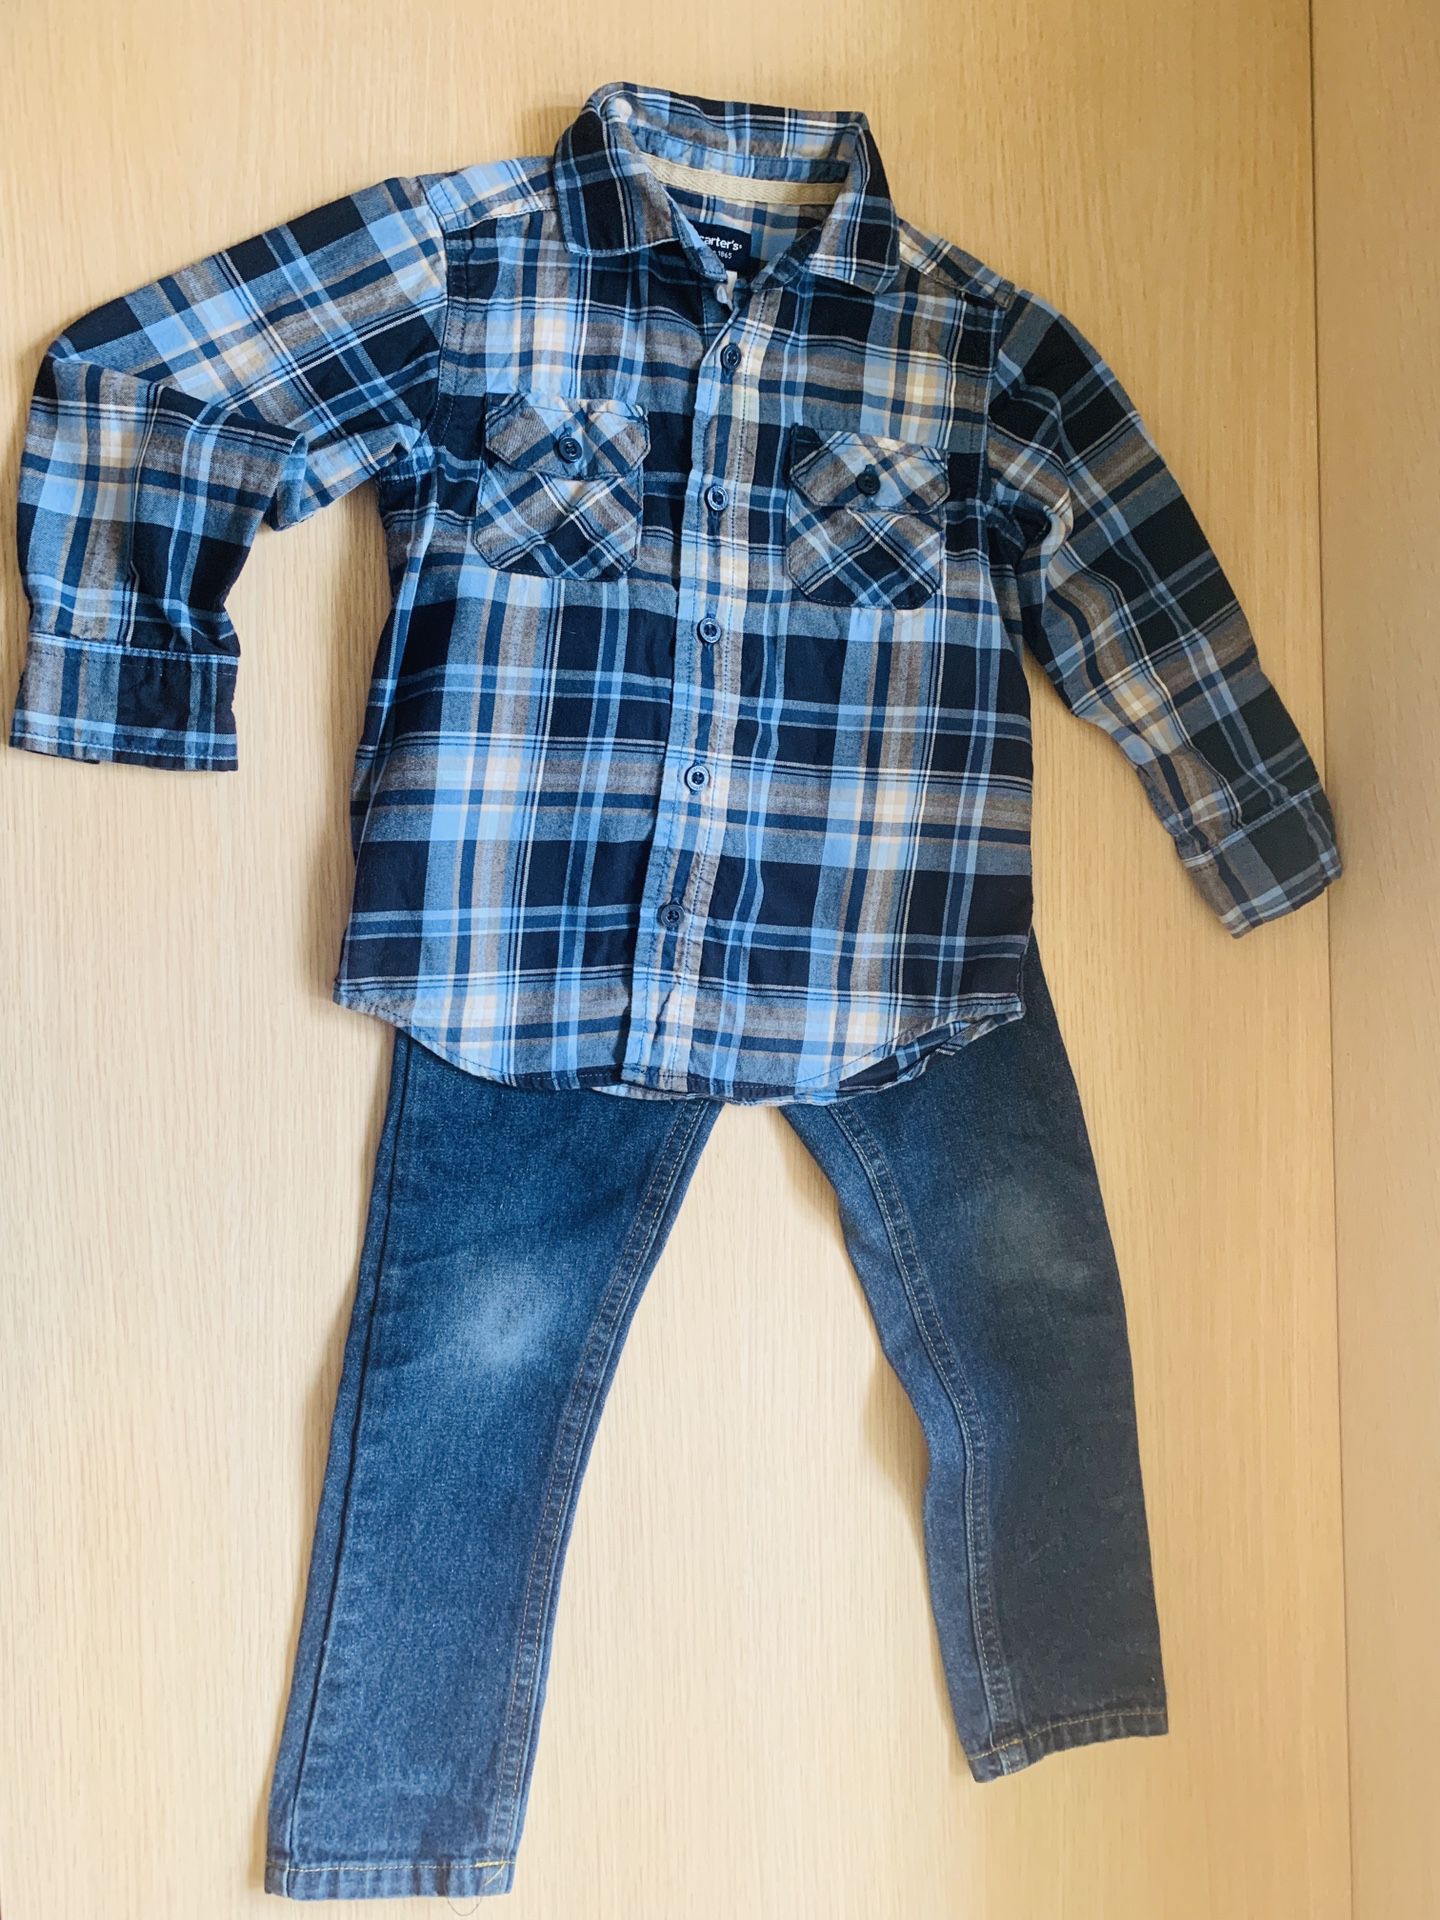 Kids clothes 7 pieces 4T. Gap, Carter’s, AmericanHank